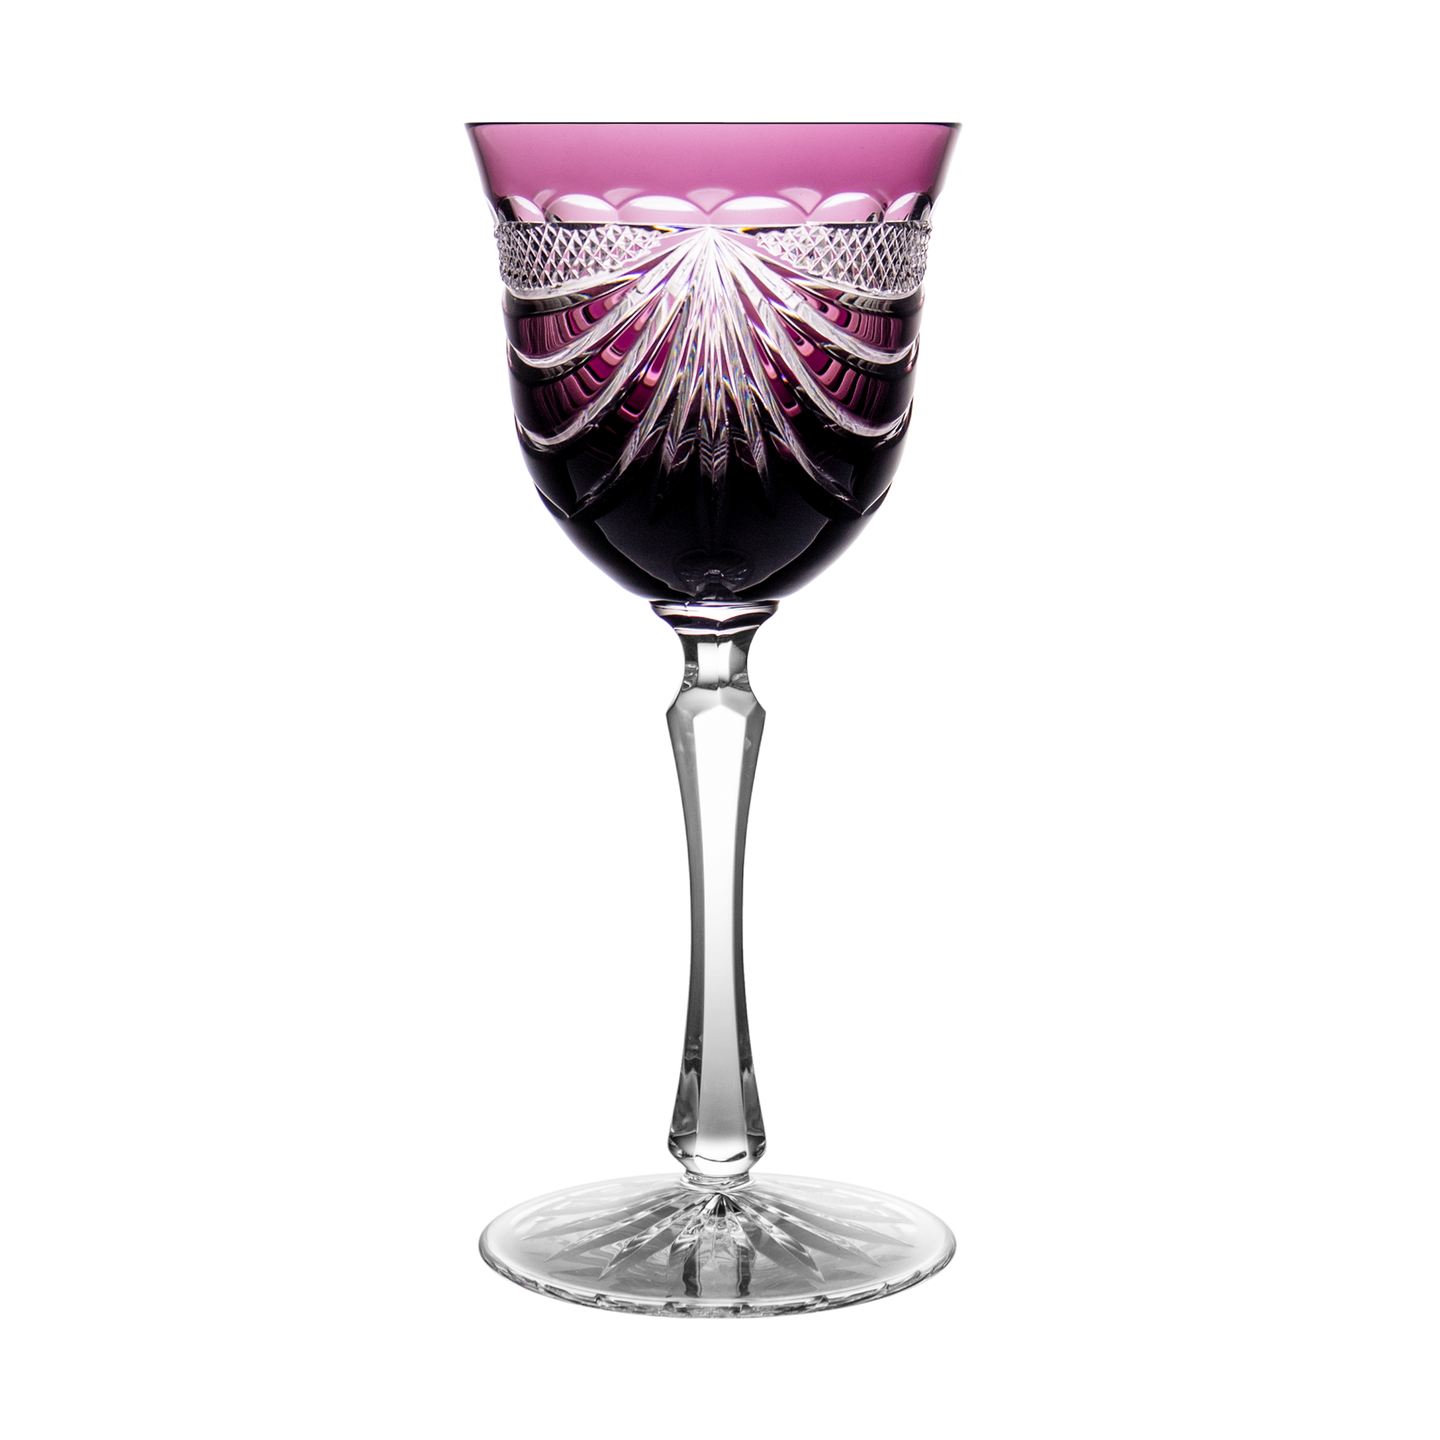 Champrosay Small Wine Glass in Amethyst Purple